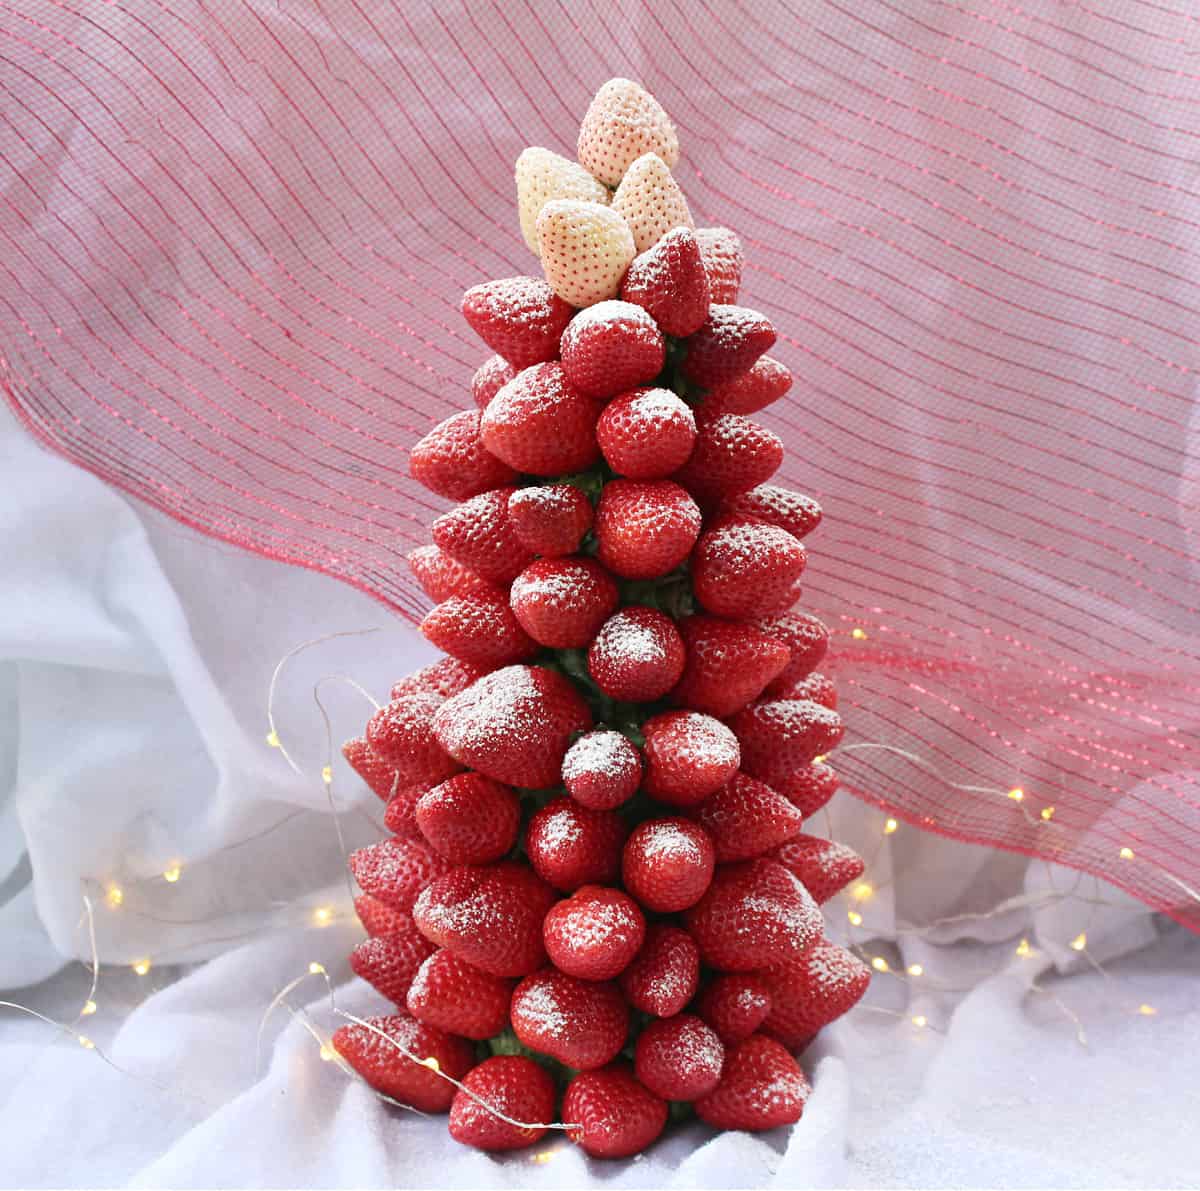 Strawberry Christmas Tree with powdered sugar